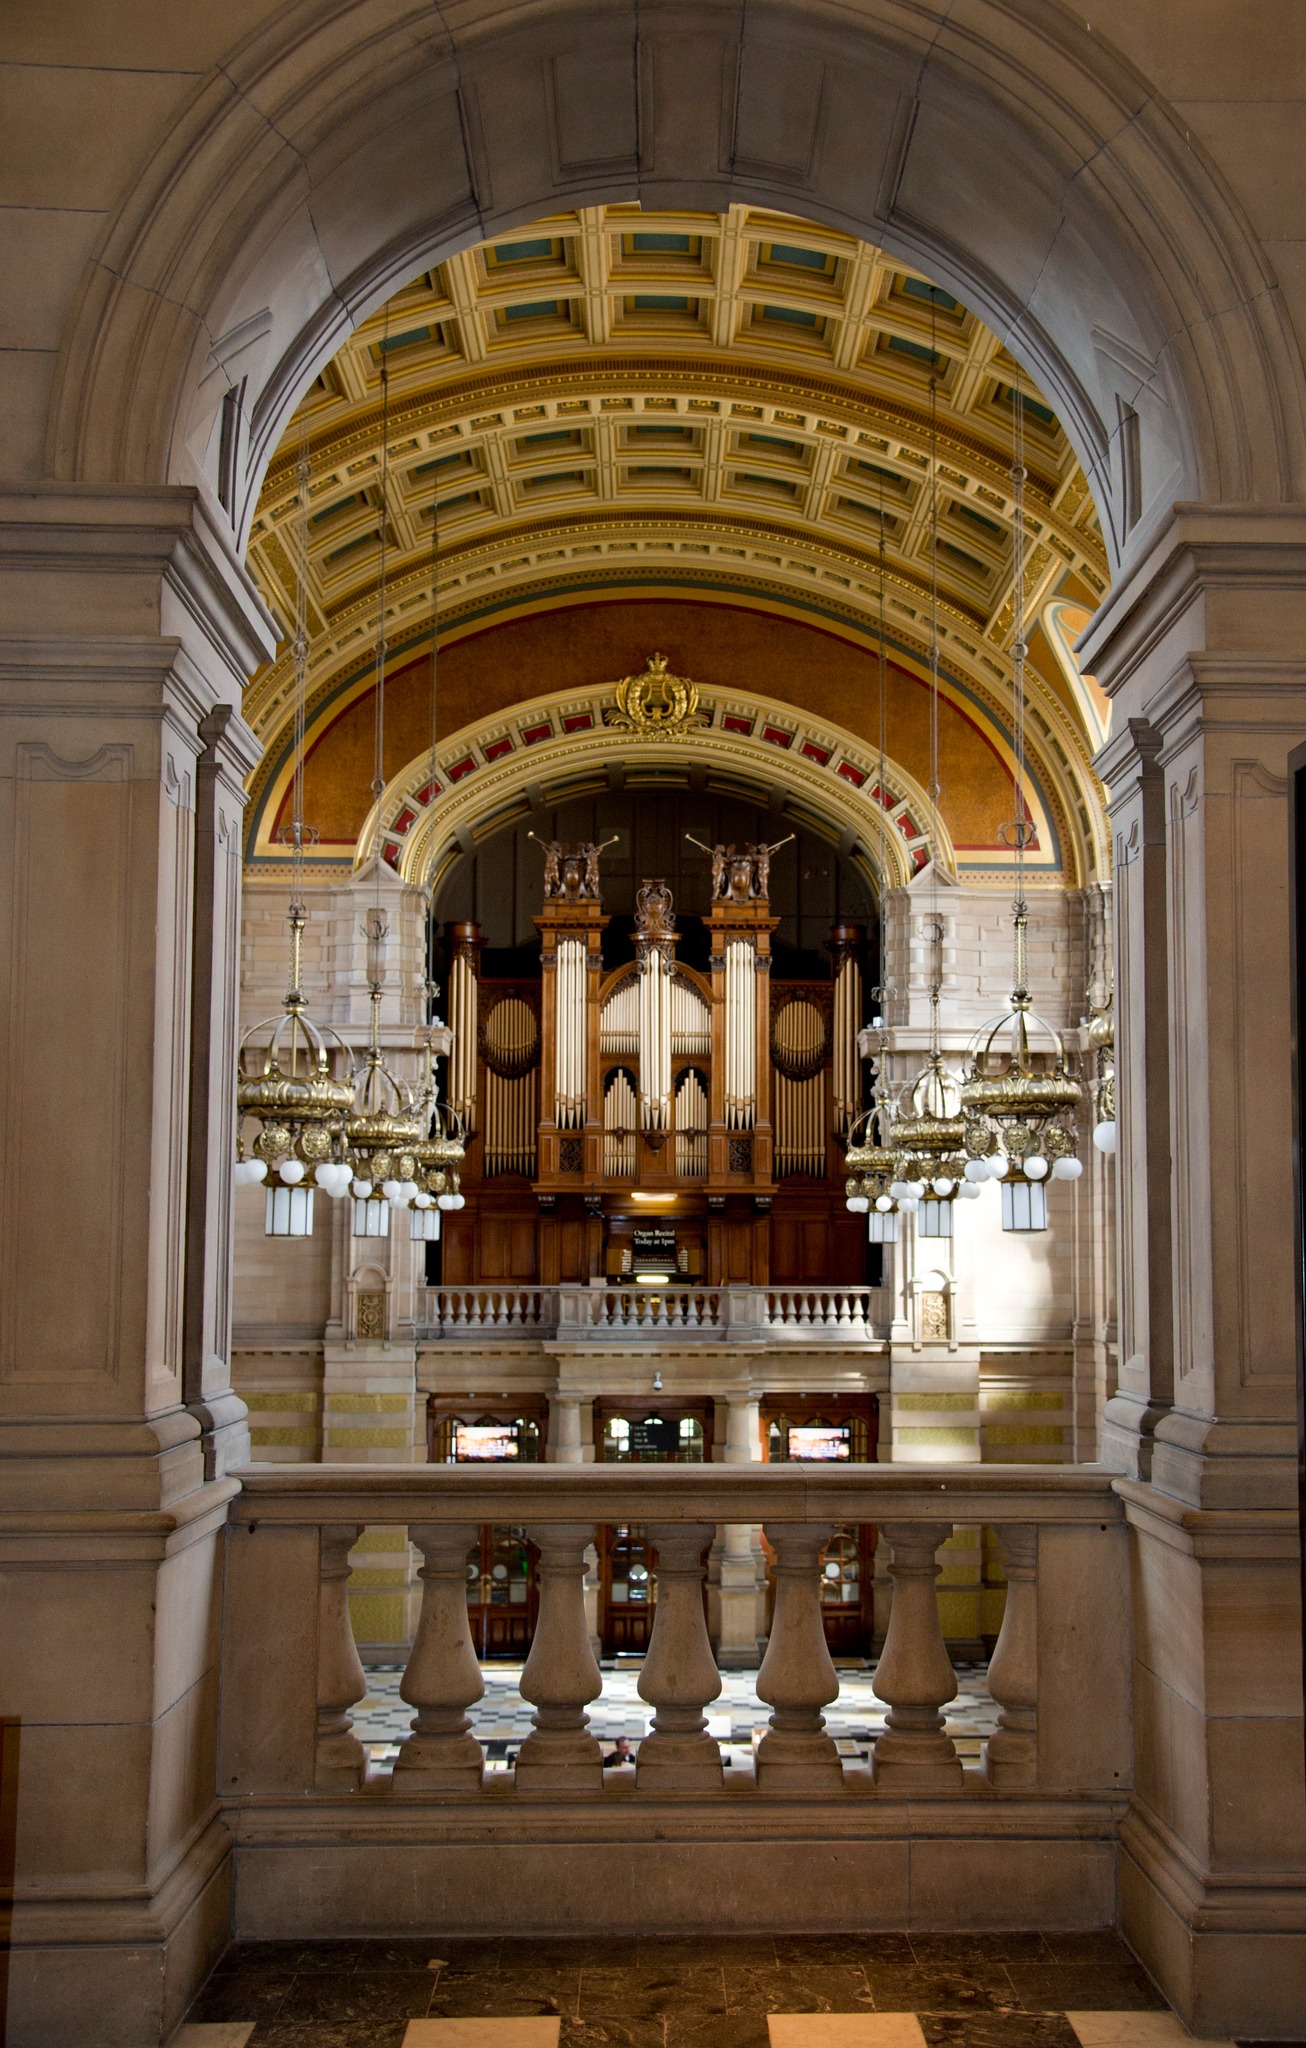 The organ at Kelvingrove Art Gallery and Museum.